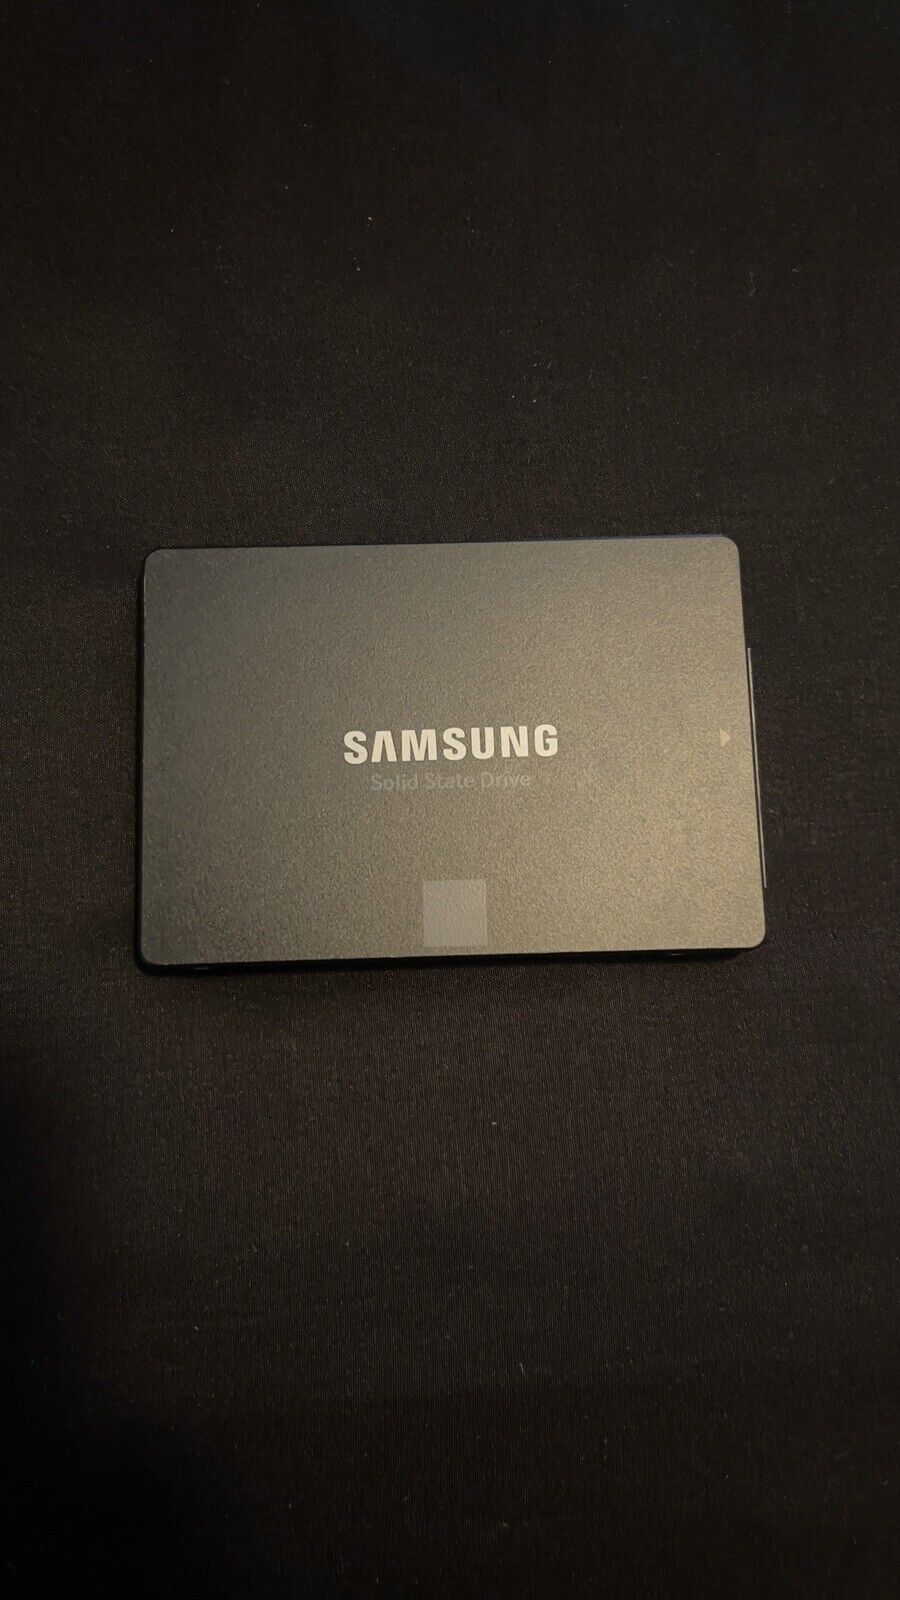 Samsung 860 EVO 500gb SATA III V-nand SSD | Works 100%